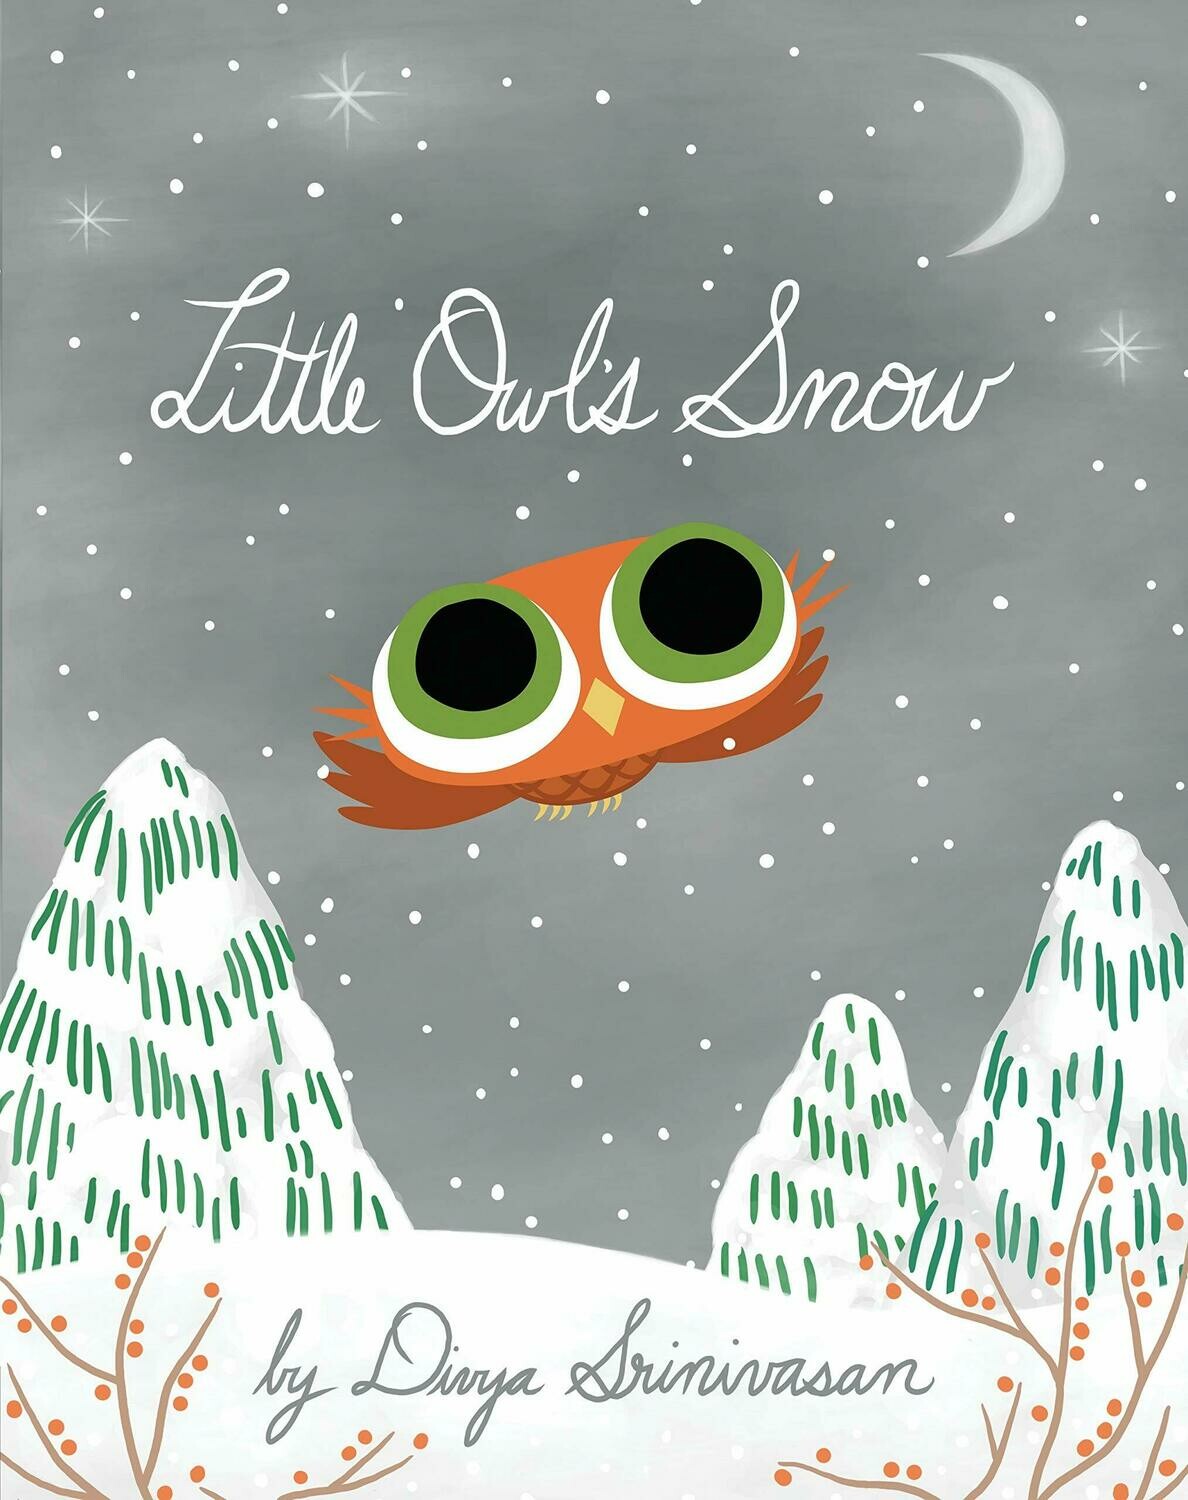 "Little Owl's Snow" Book